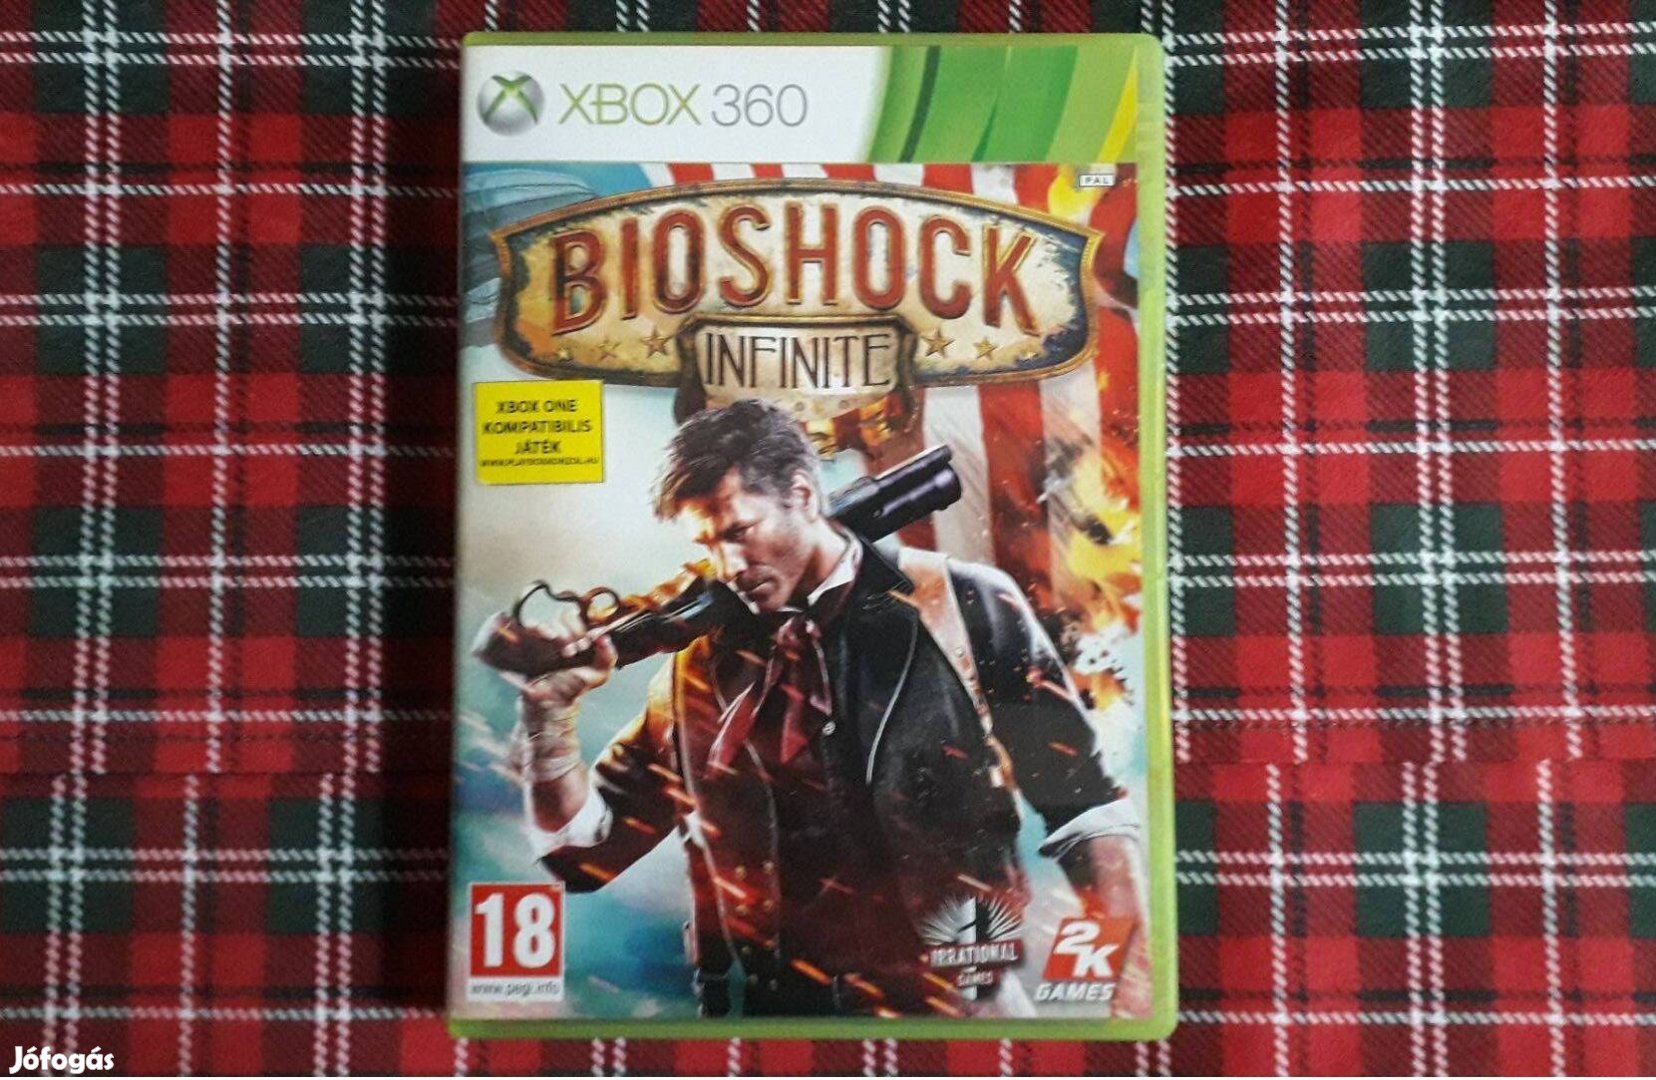 Xbox 360 Bioshock Infinite (gyári, angol nyelvű)